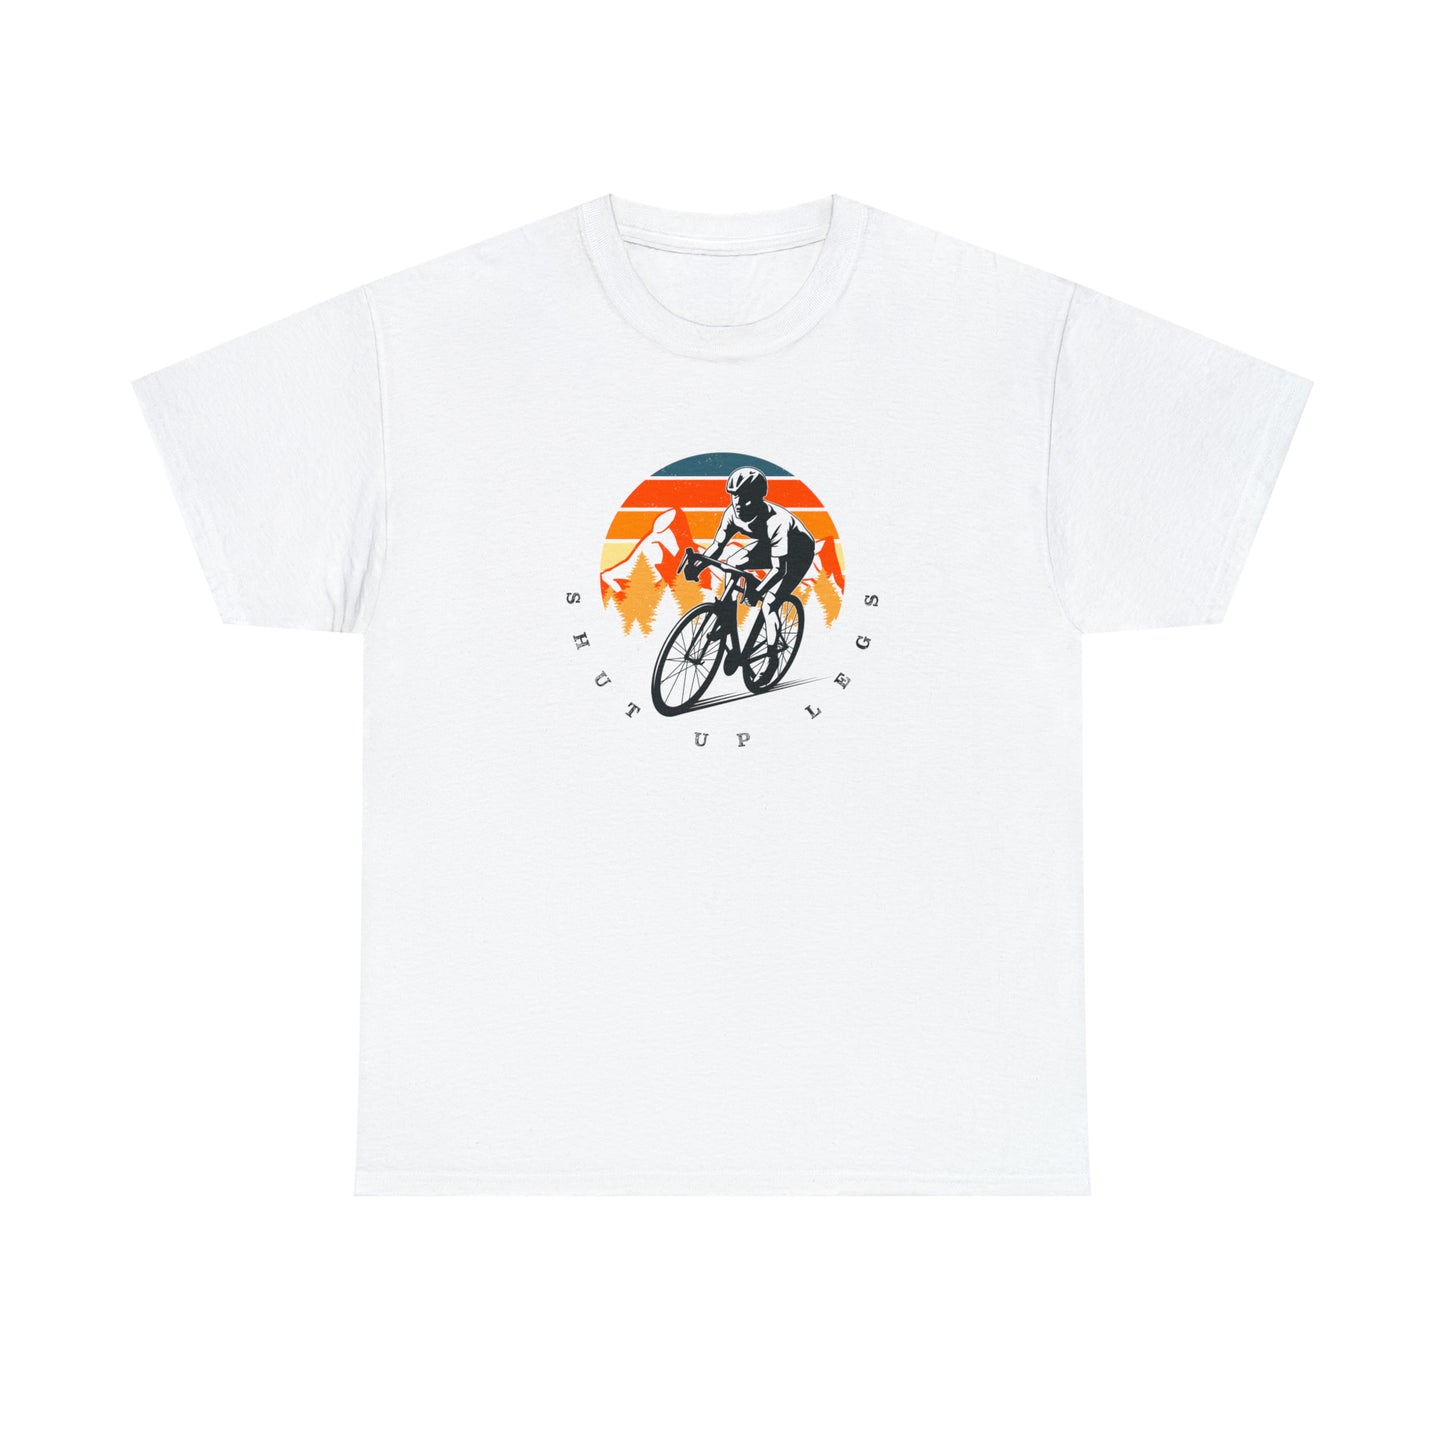 Cycling T-Shirt For Shut Up Legs TShirt For Century Ride T Shirt For Bike Shirt For Cycling Race Shirt